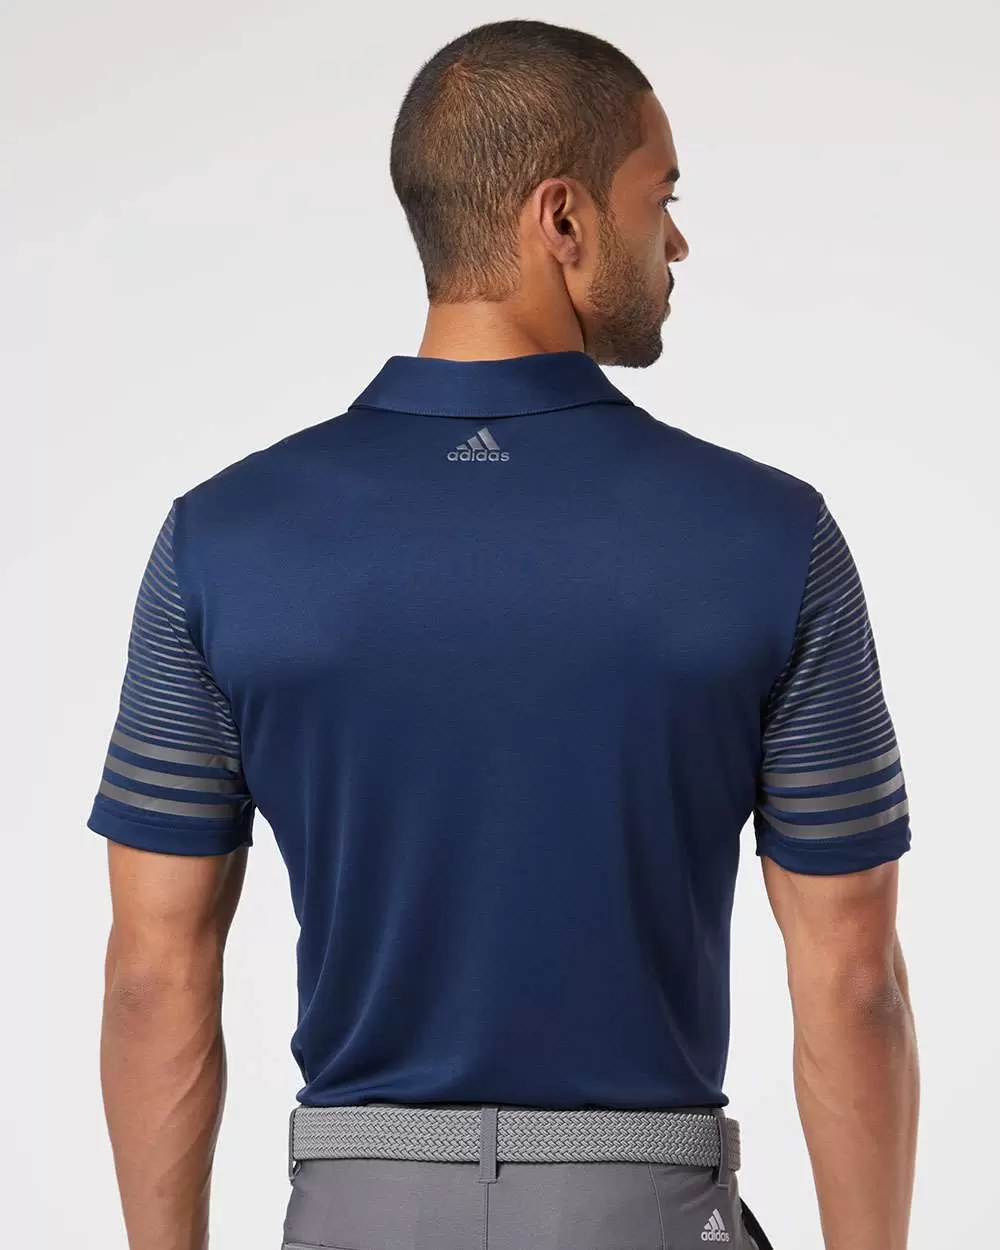 adidas Ultimate365 10-Inch Golf Shorts - Grey | Men's Golf | adidas US